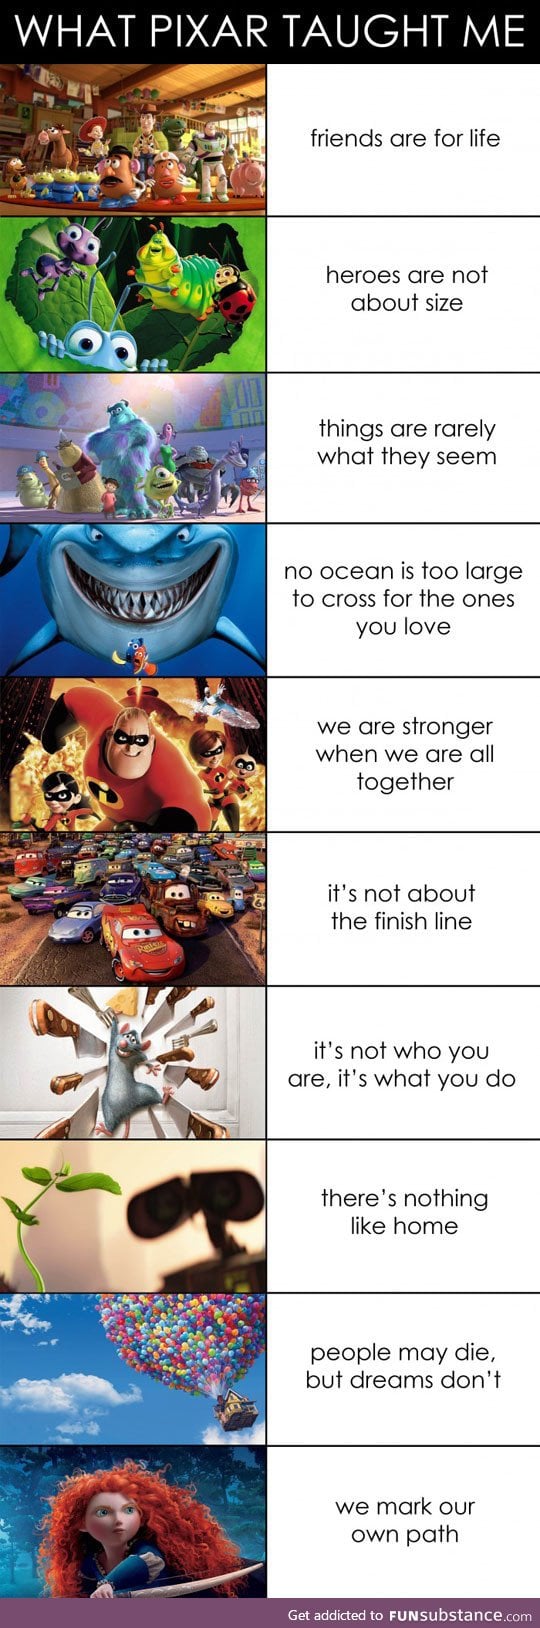 What pixar actually taught me